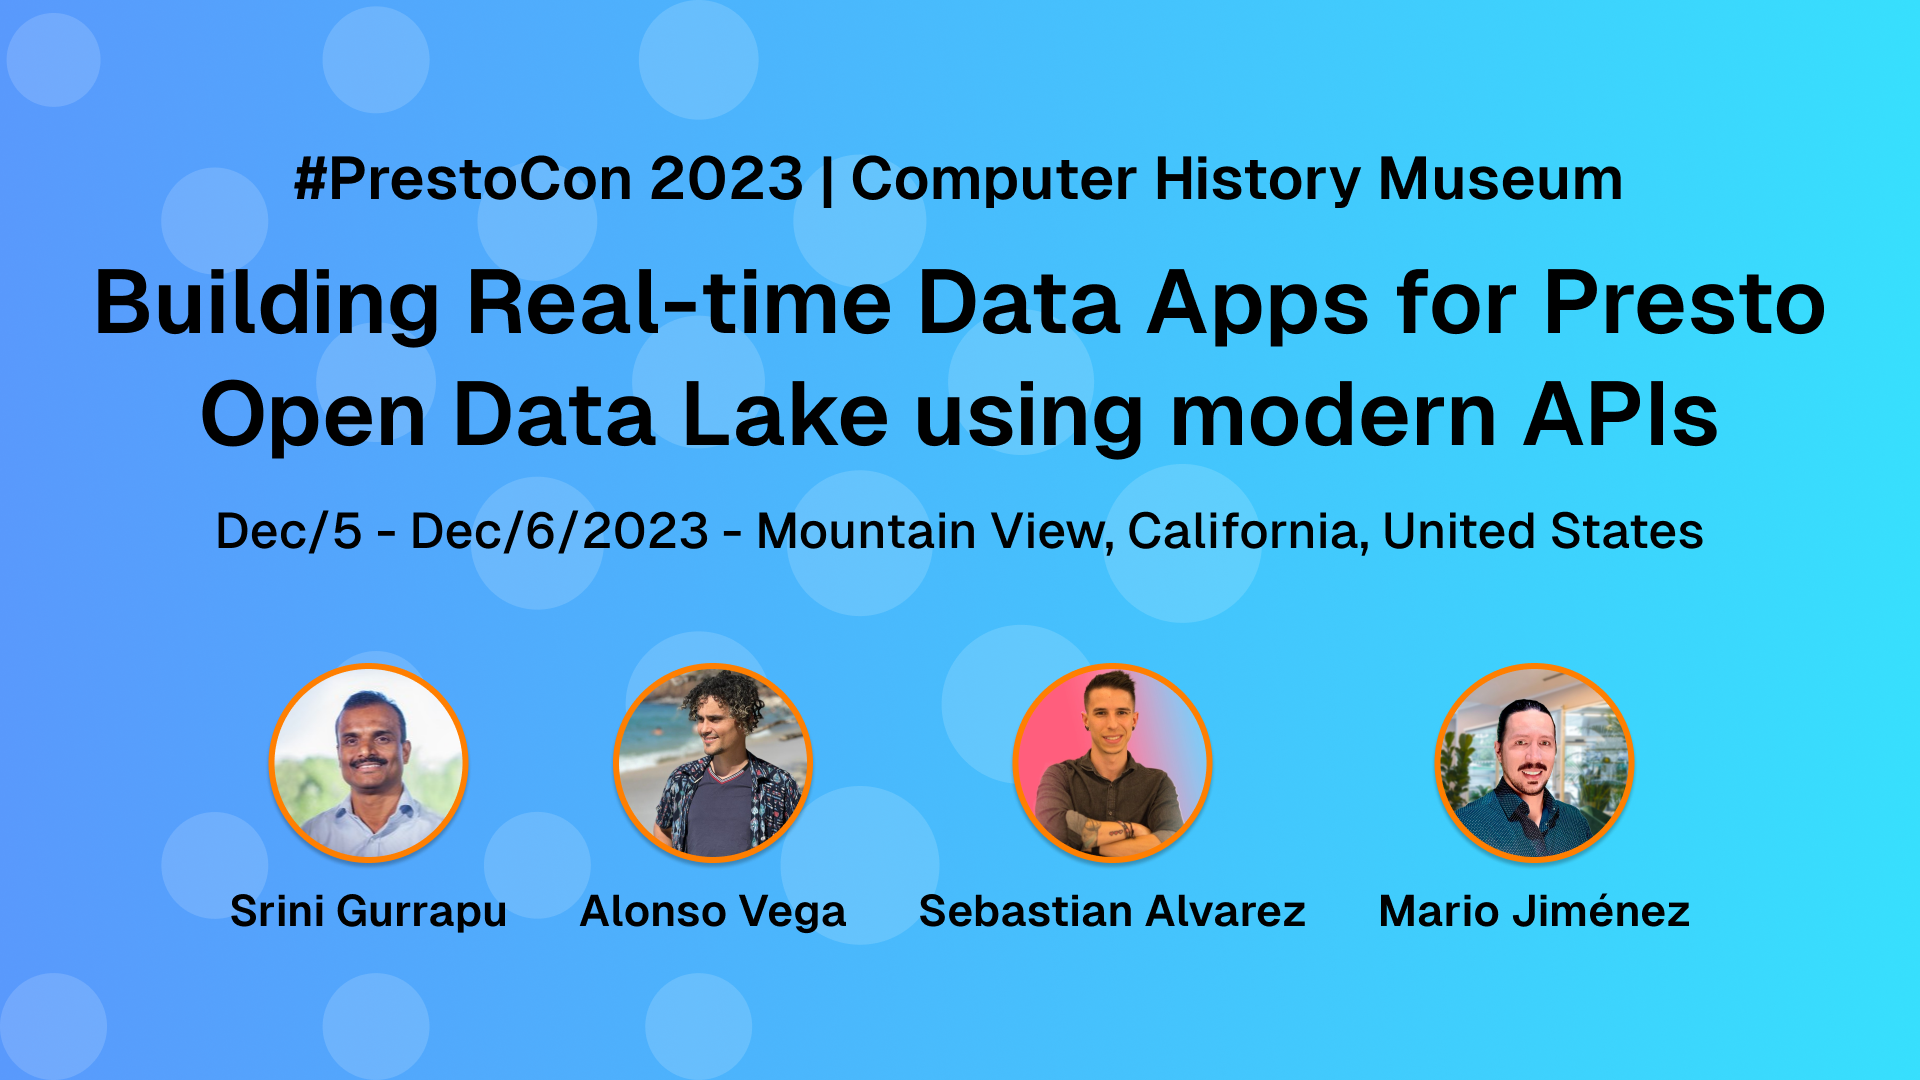 #PrestoCon 2023 | Building Real-time Data Apps for Presto Open Data Lake using modern APIs